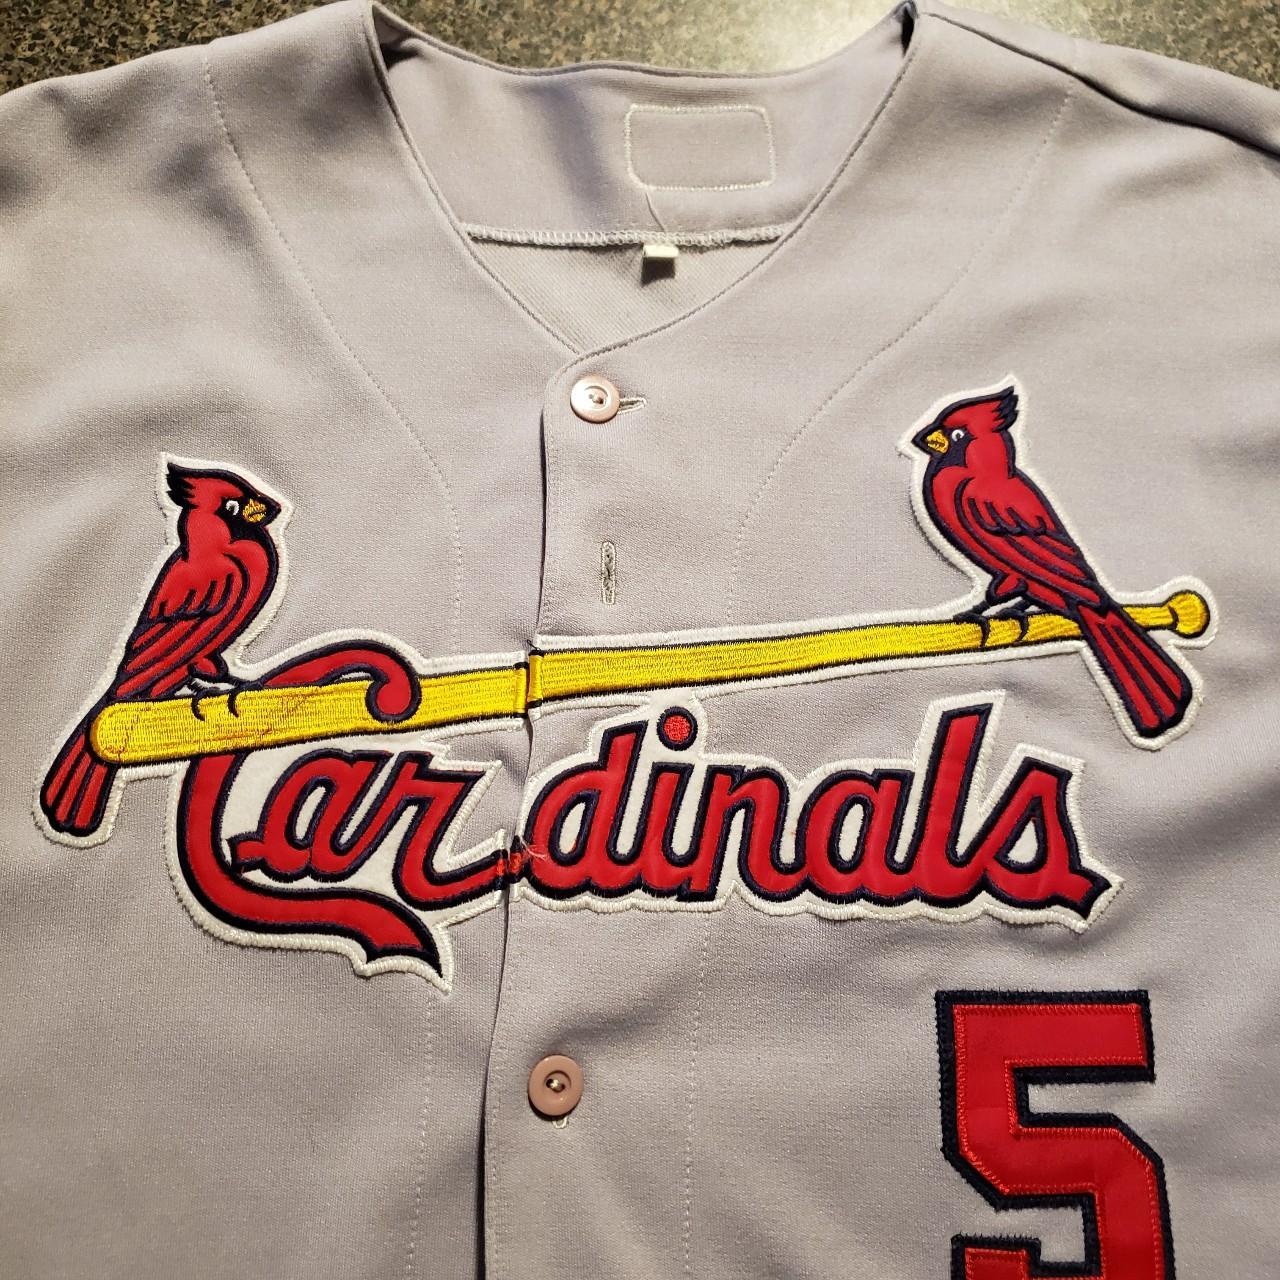 St. Louis Cardinals Baseball Jersey Pujols Pit to - Depop